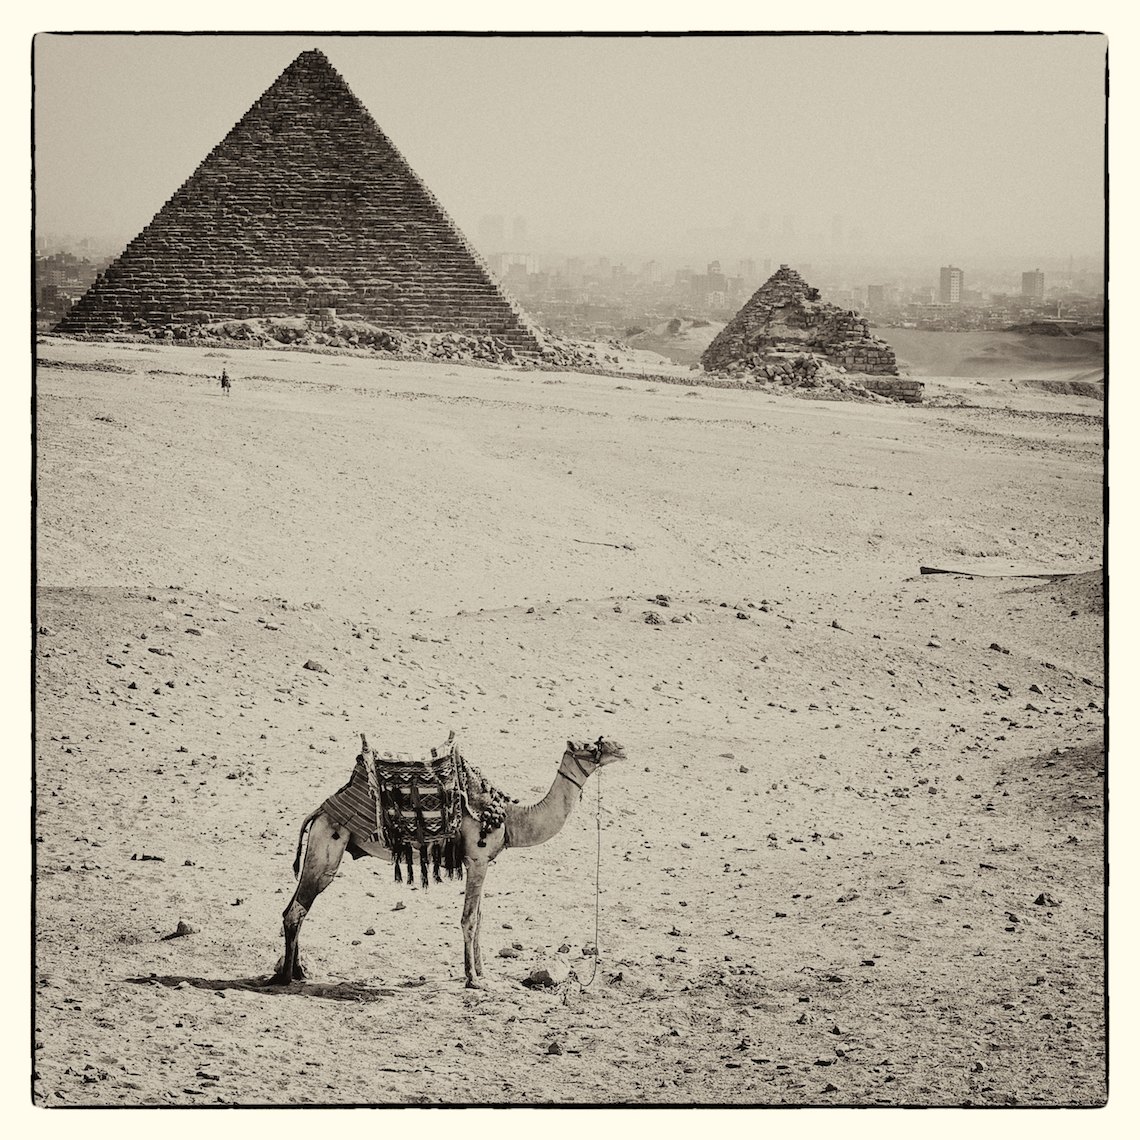 Barth_Egypt_pyramids 003.jpg